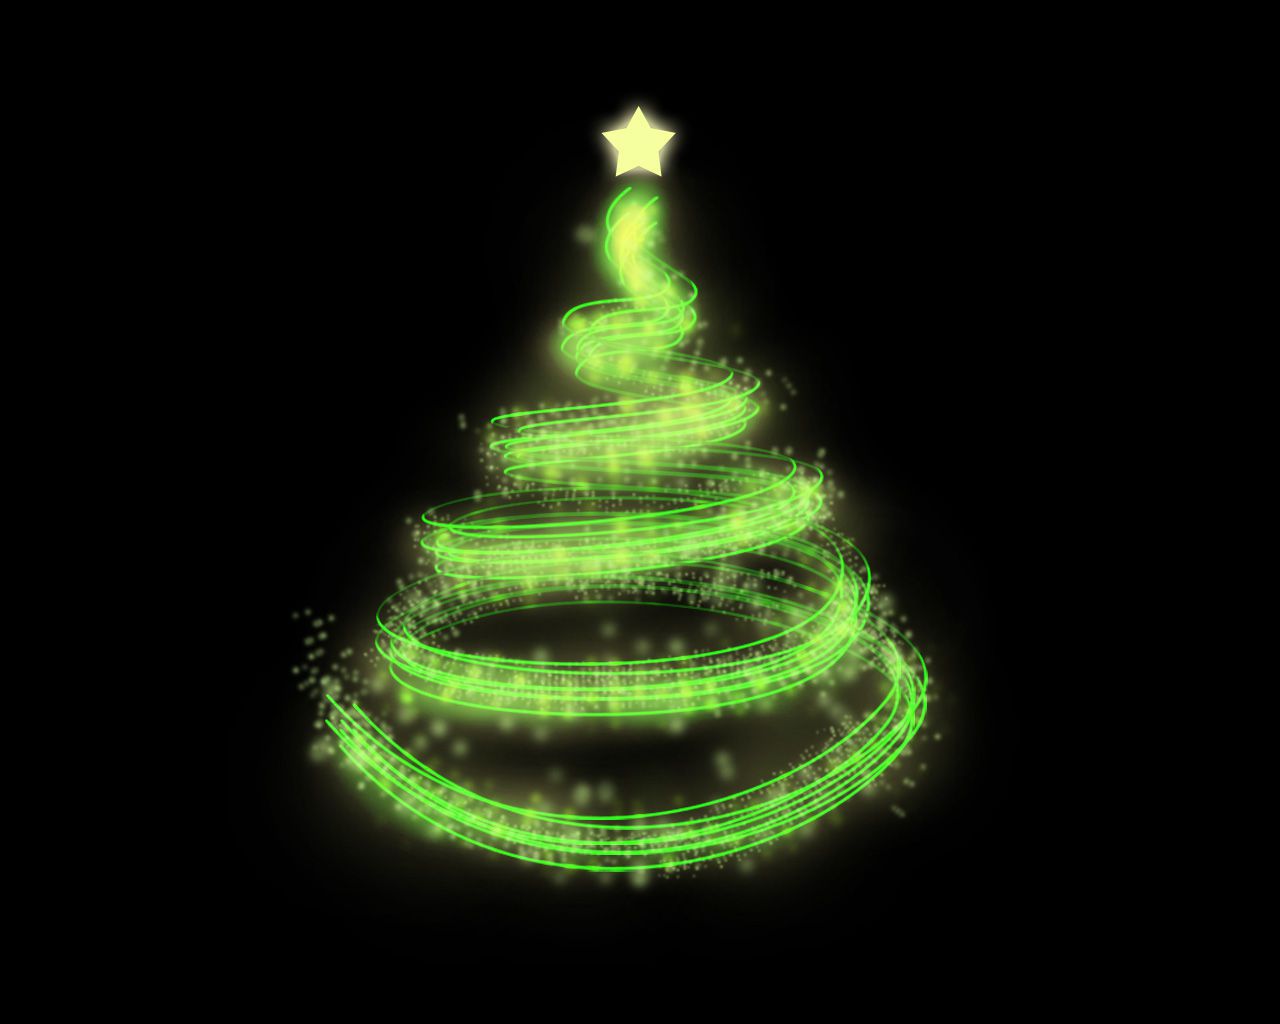 merry-christmas-tree